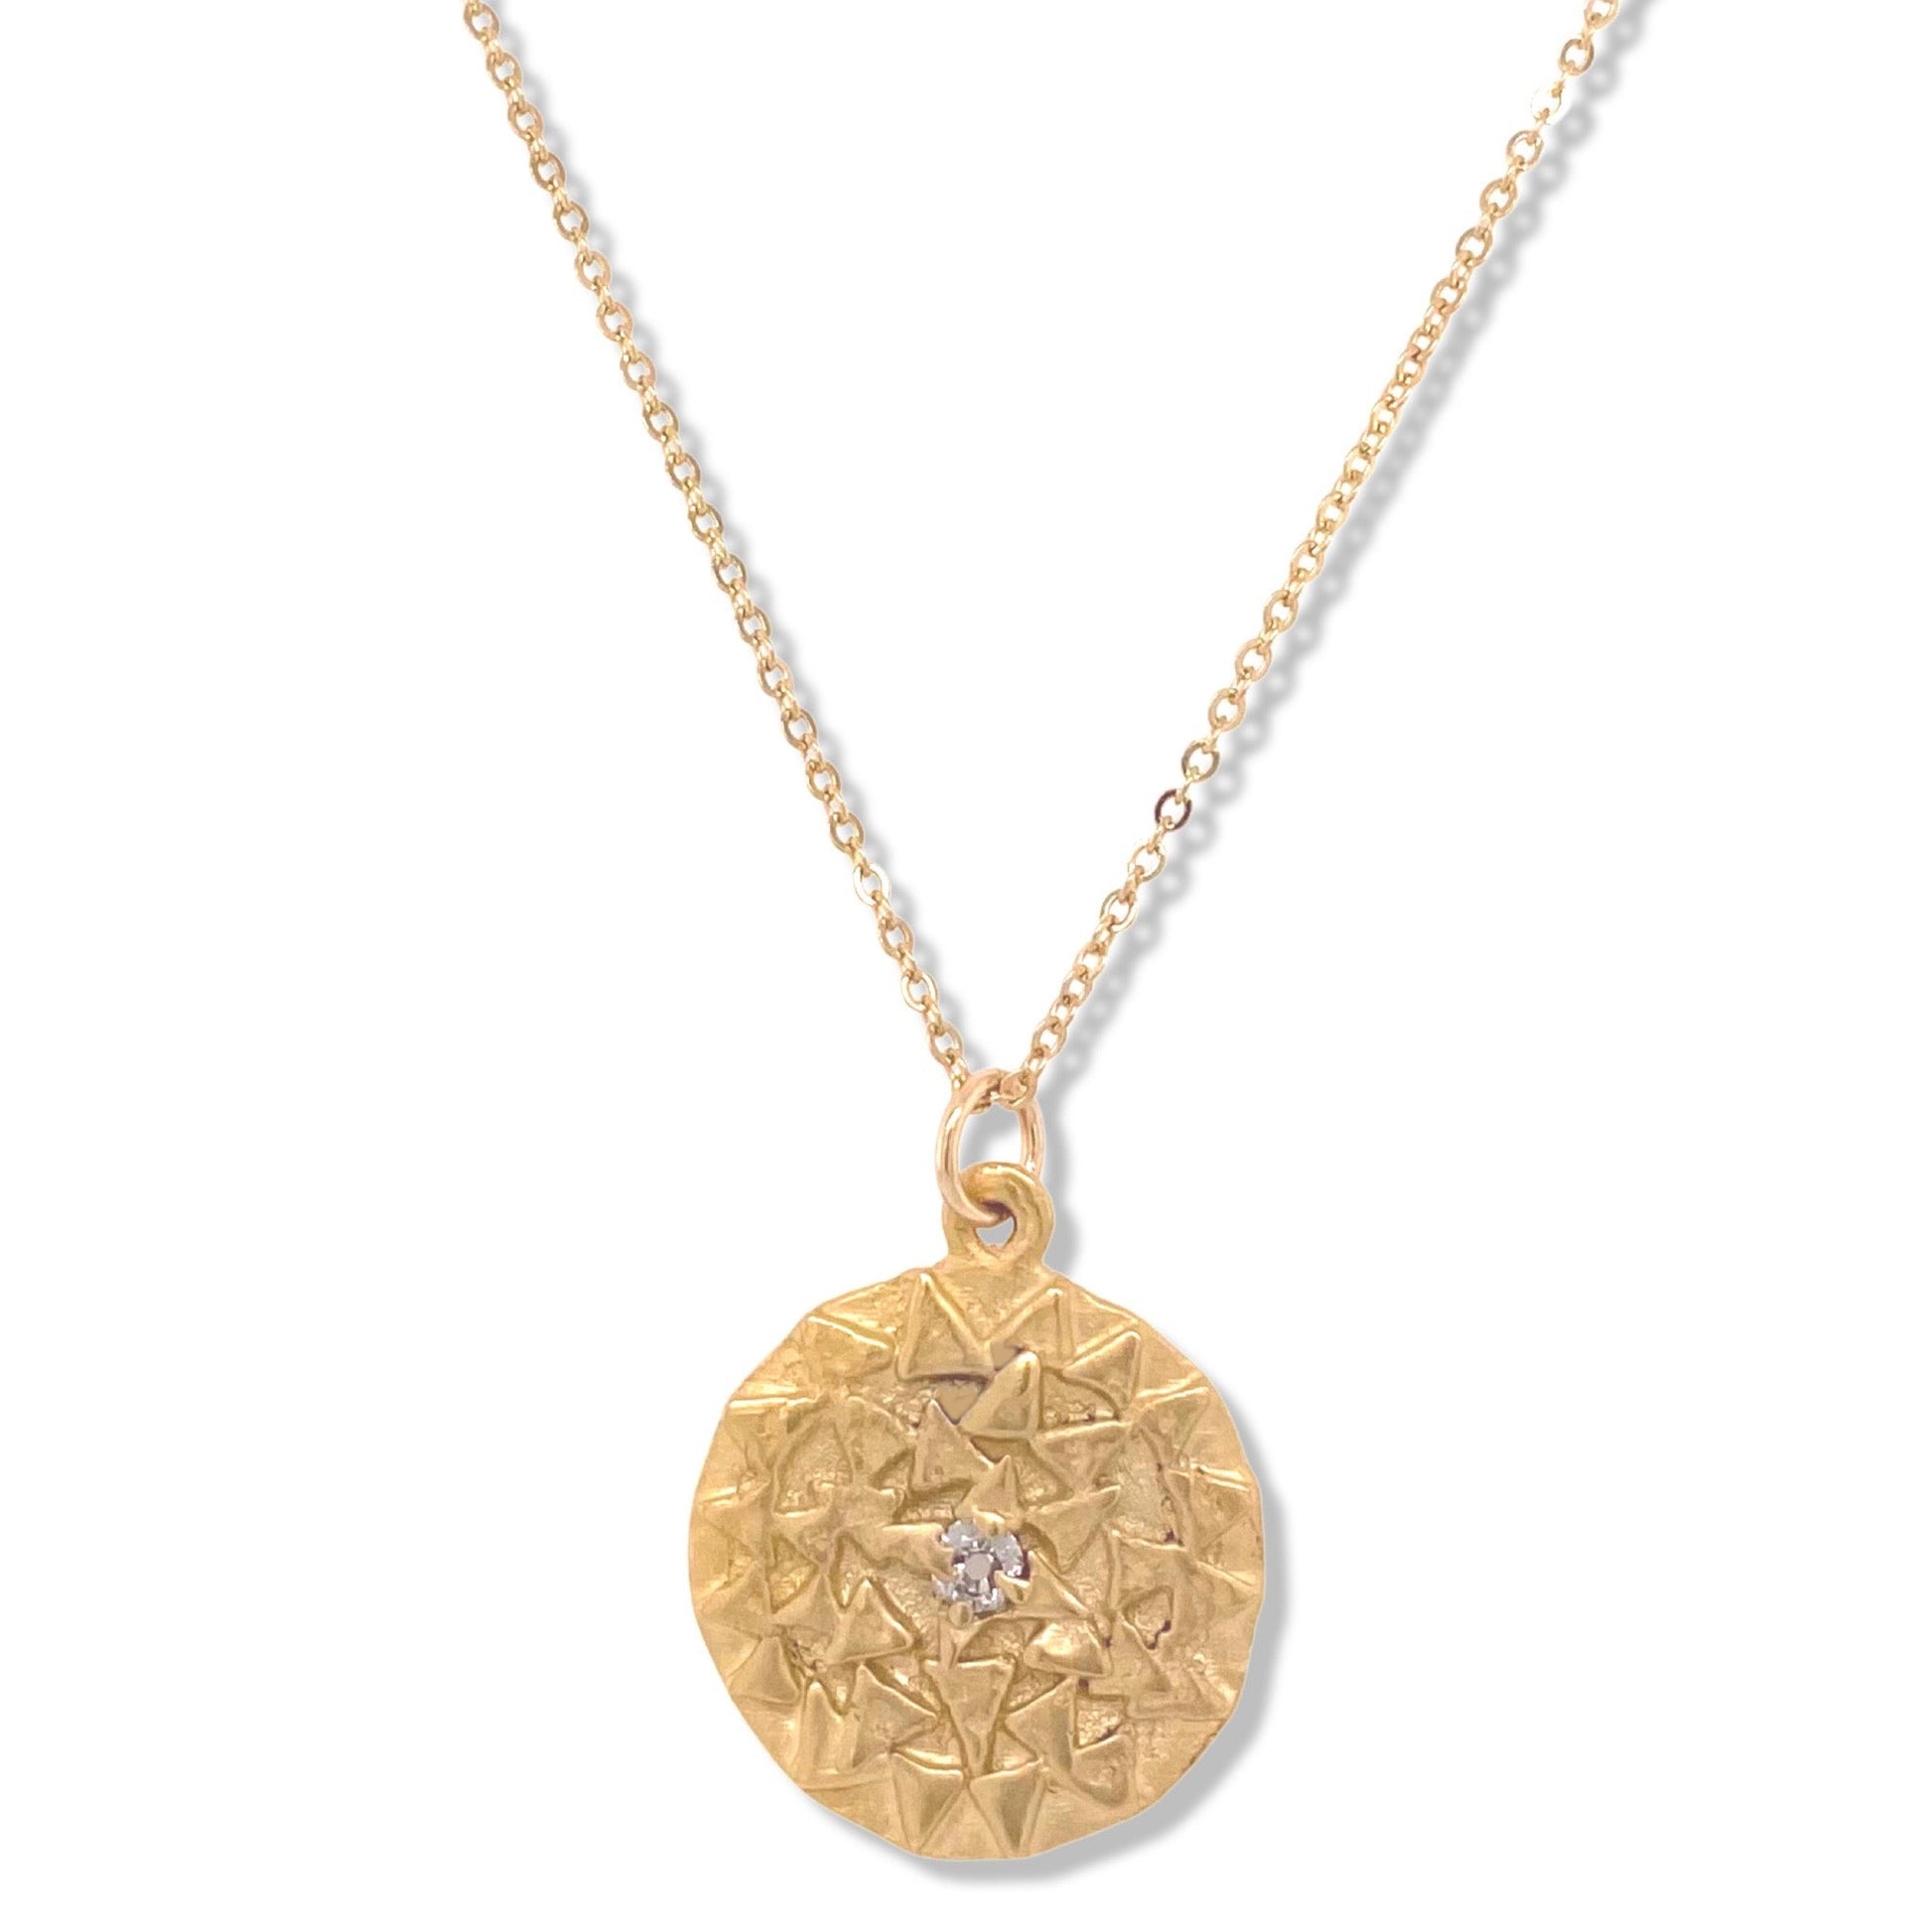 Surya Necklace in Gold | Nalu | Nantucket